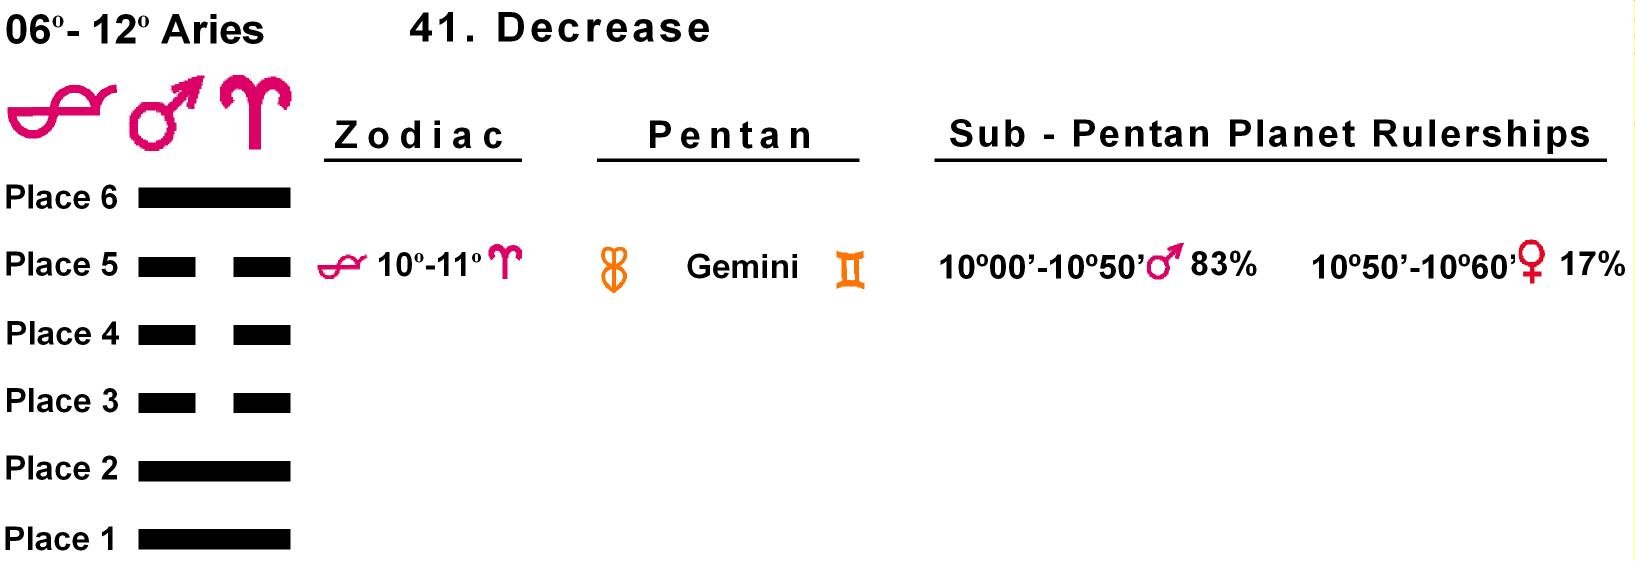 Pent-lines-01AR 10-11 Hx-41 Decrease